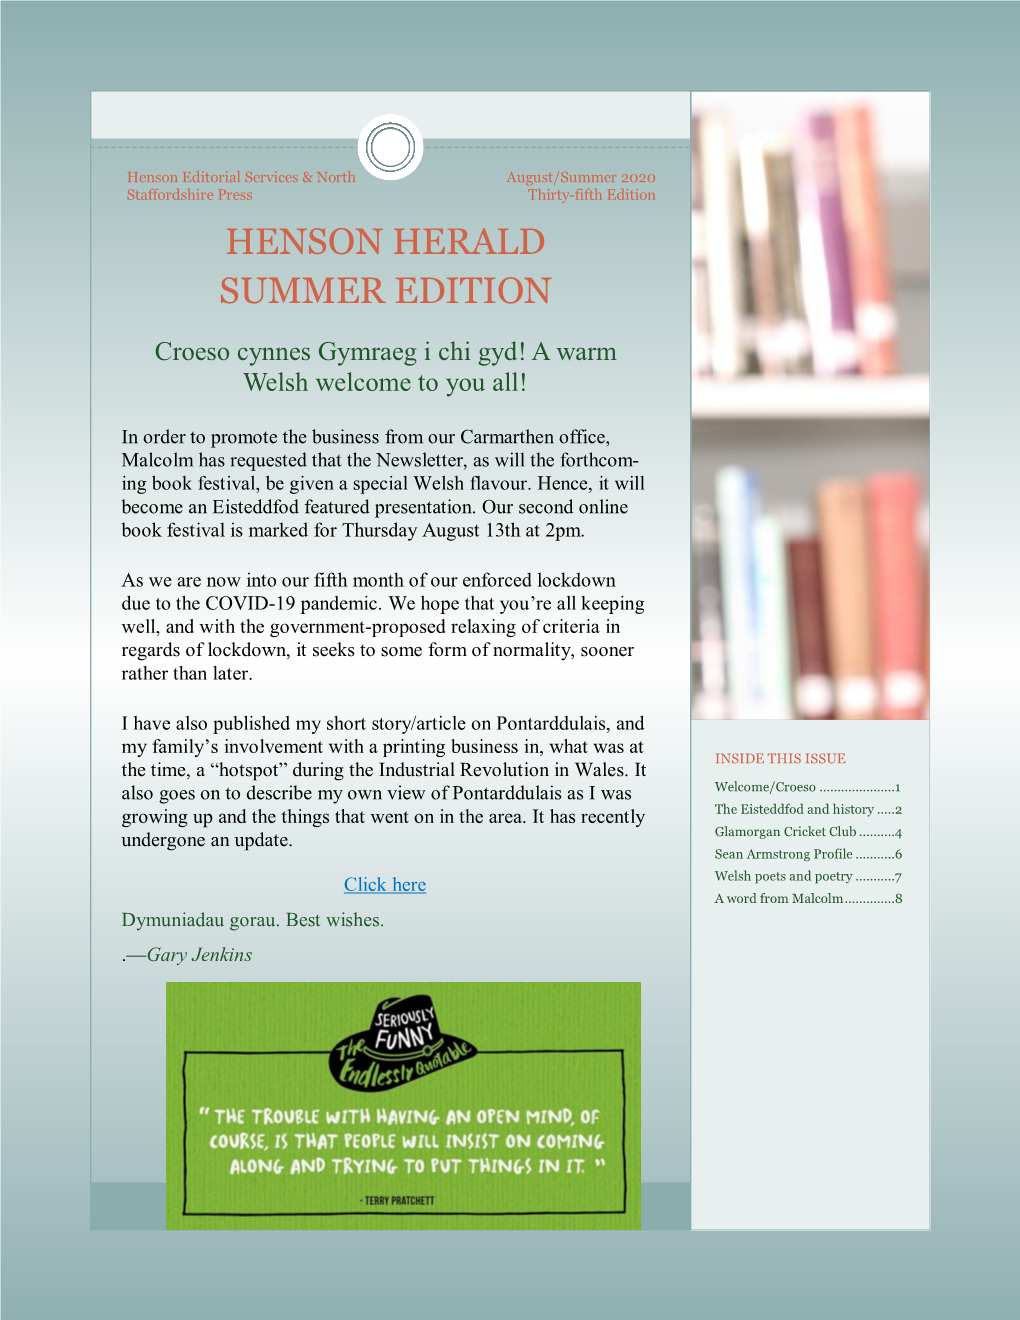 Henson Herald Summer Edition